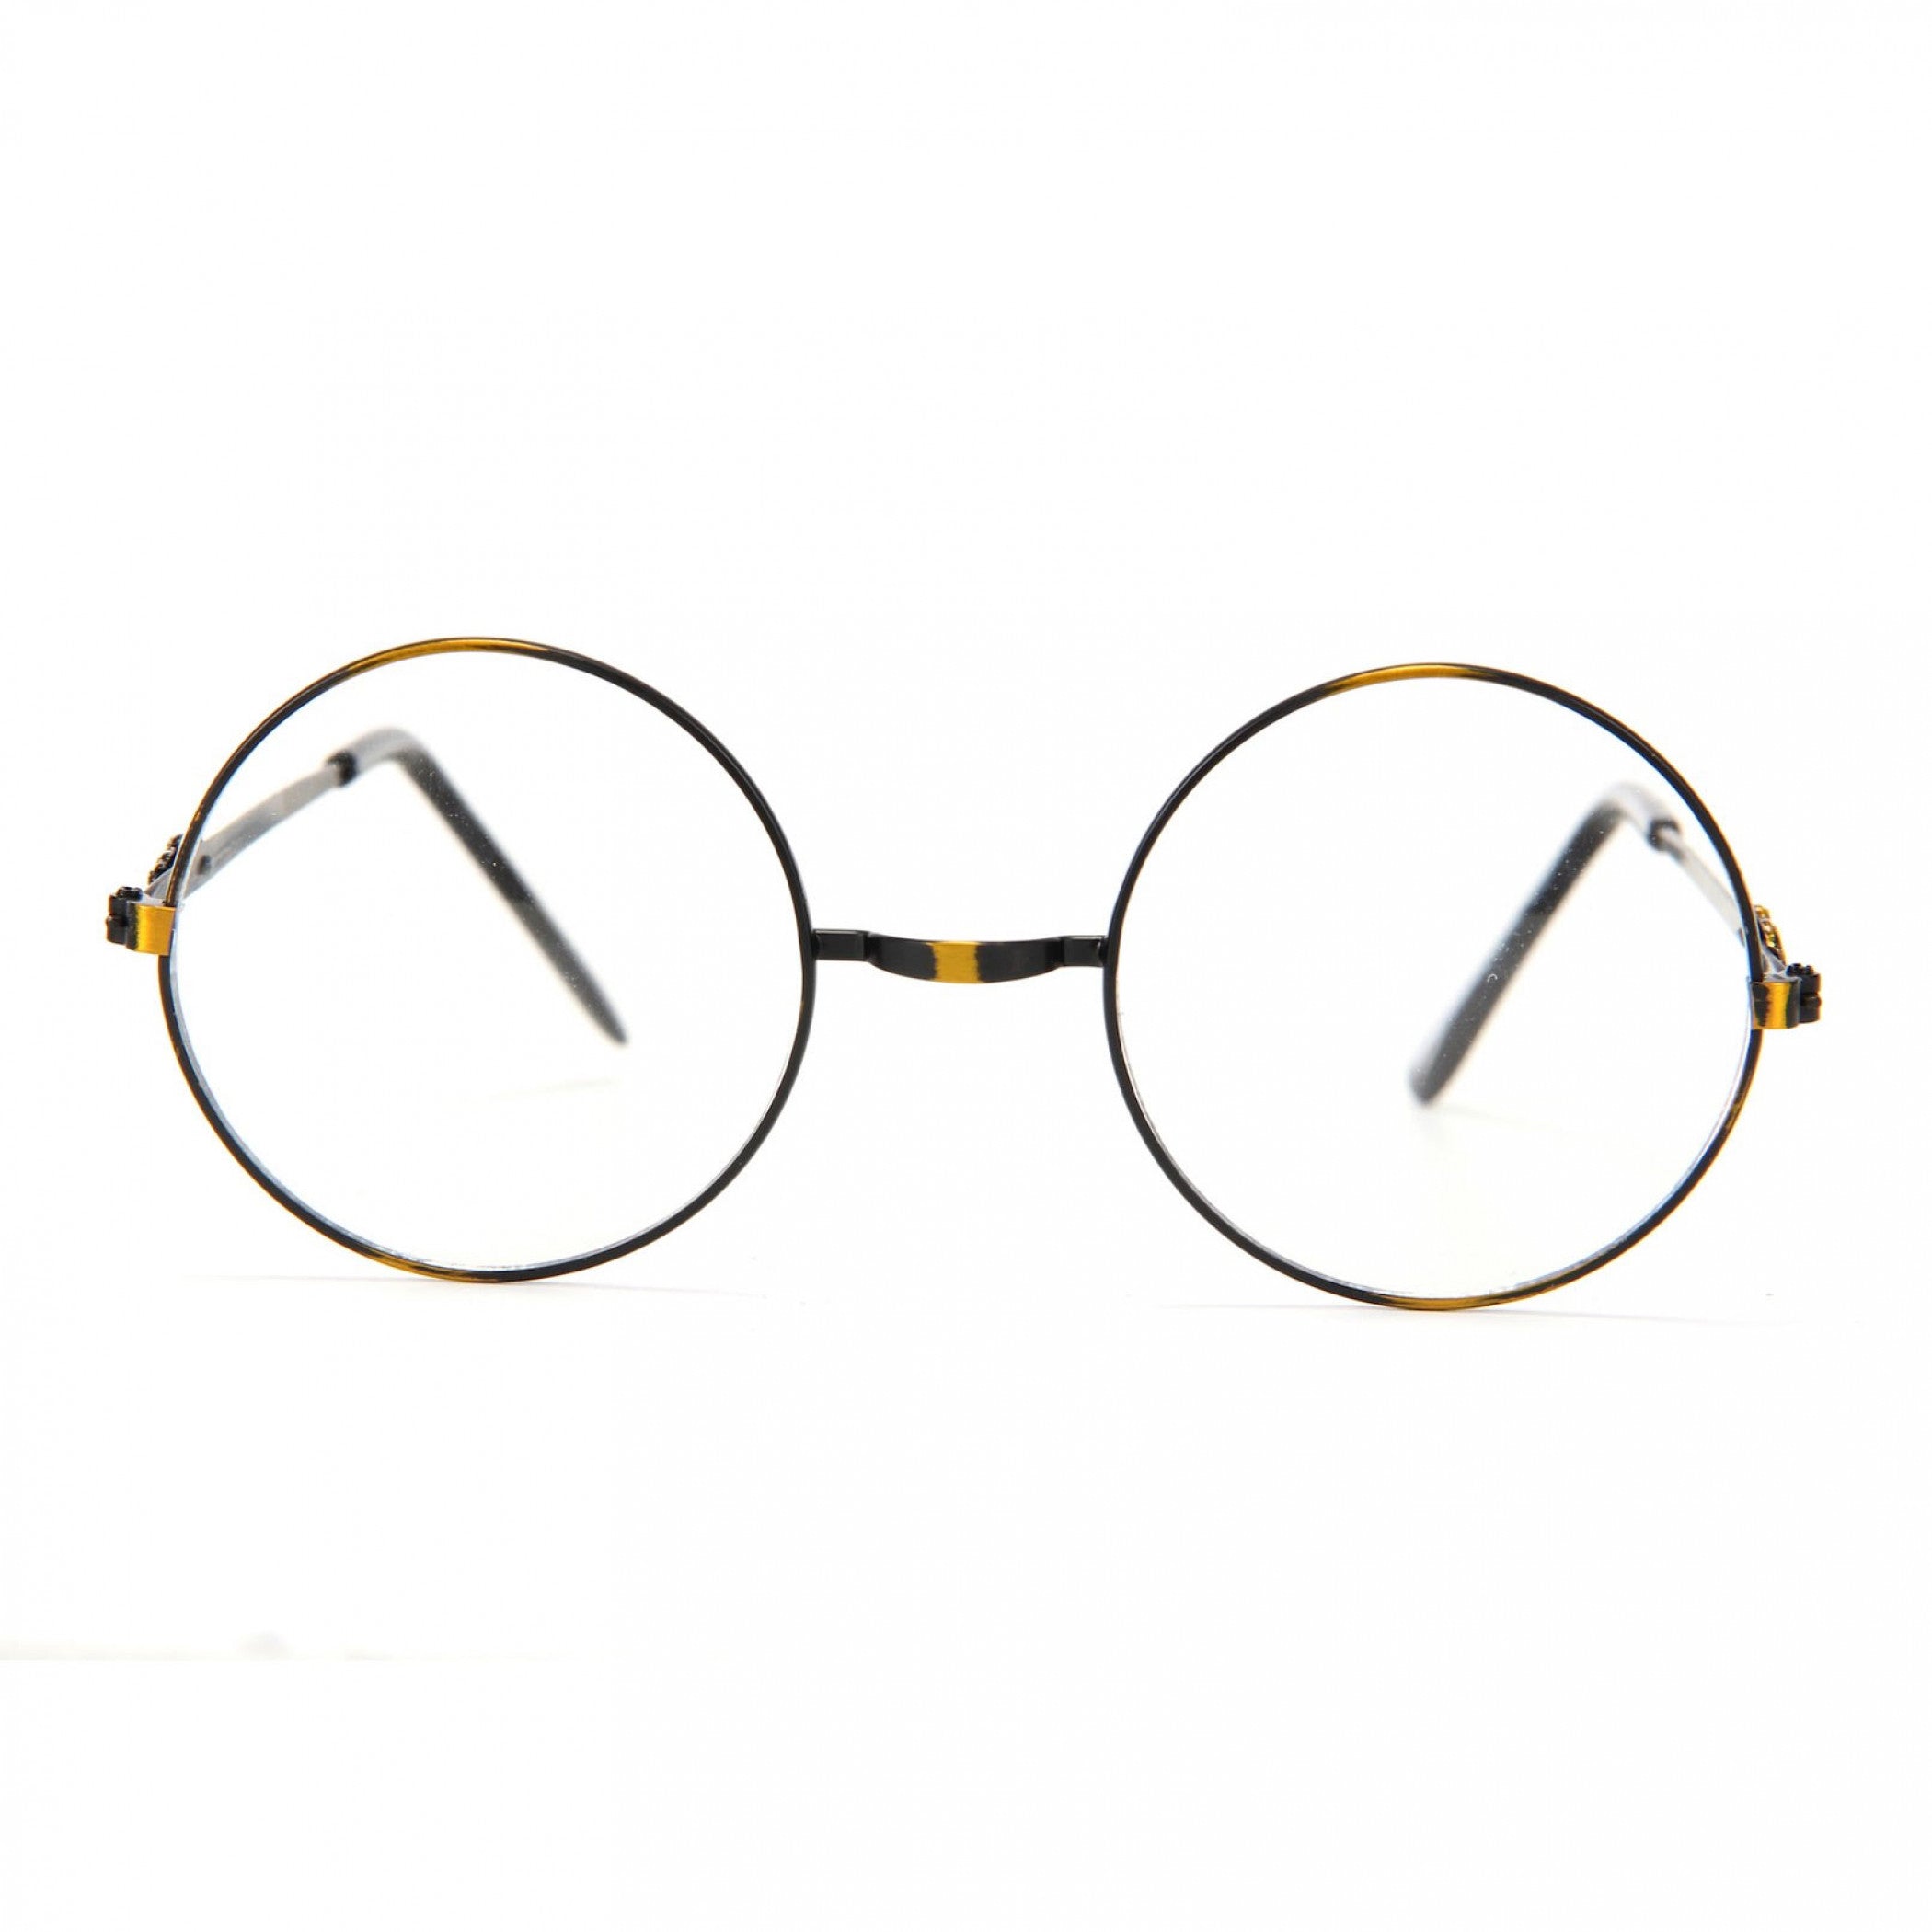 title:Harry Potter Glasses;color:Black